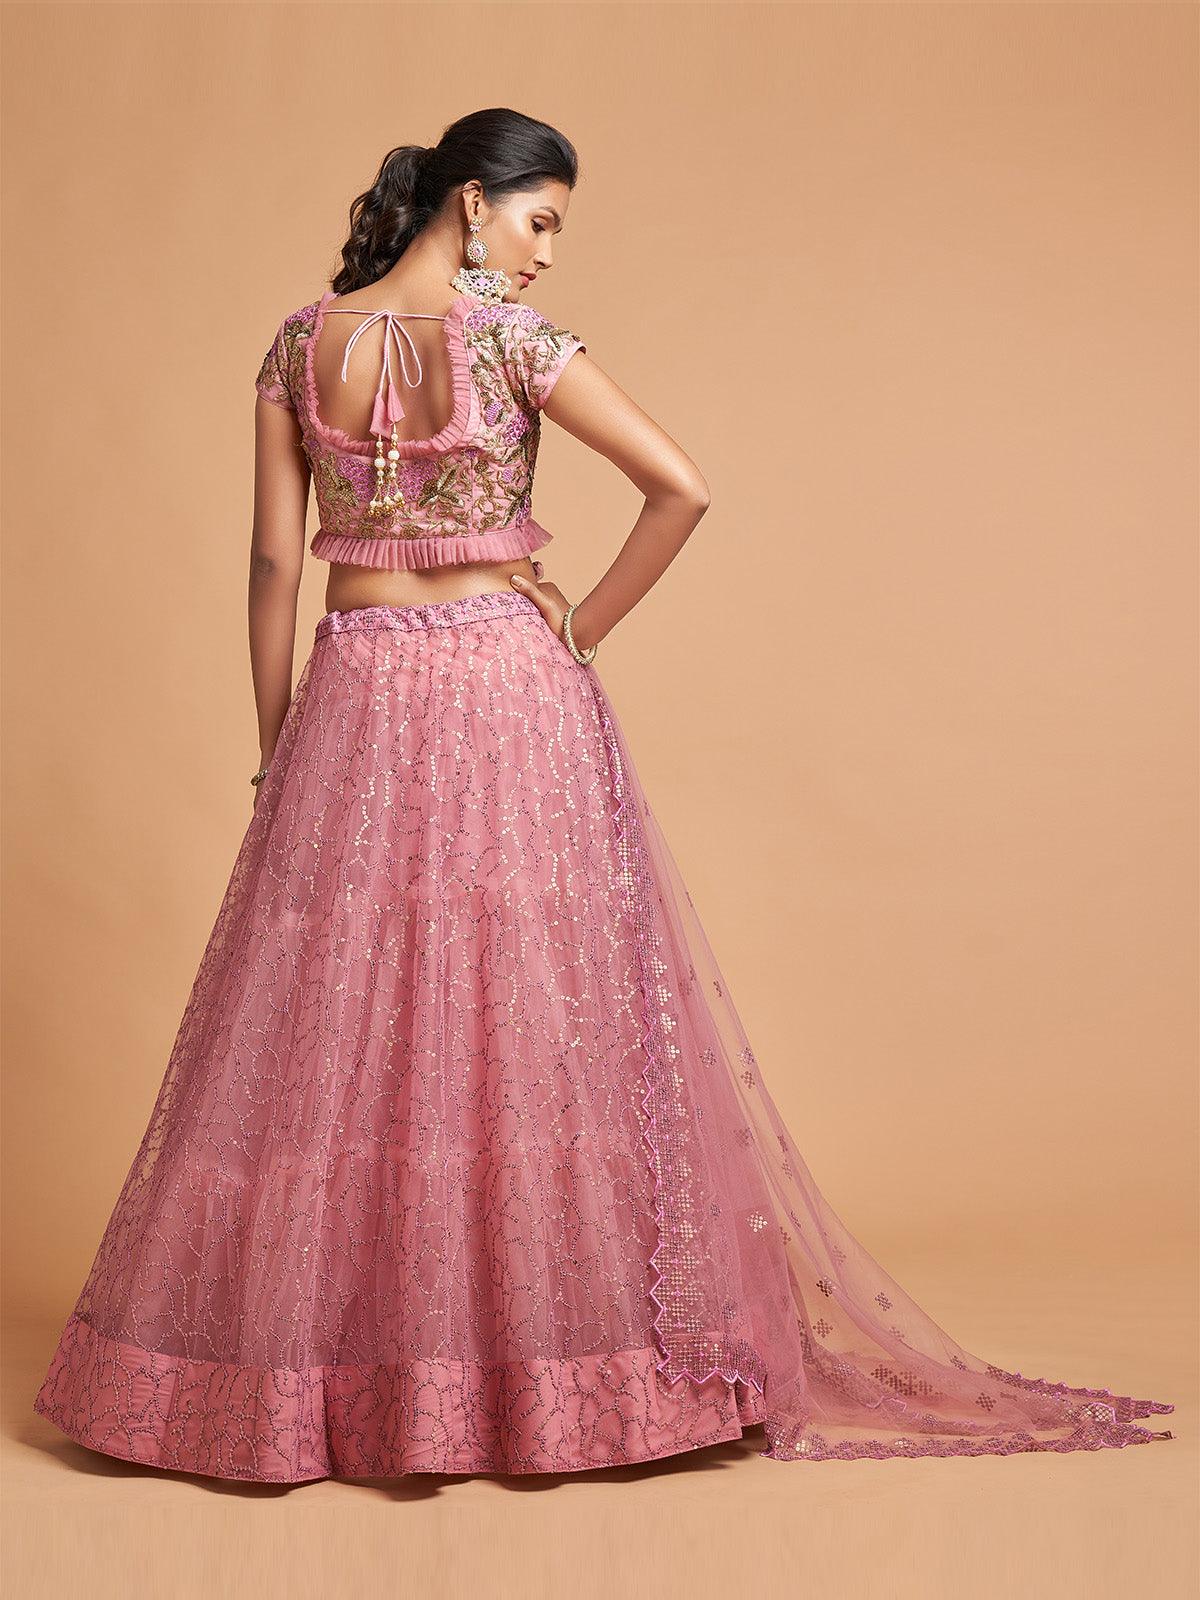 Women's Blush Pink Abstract Designer Lehenga Choli Set - Odette